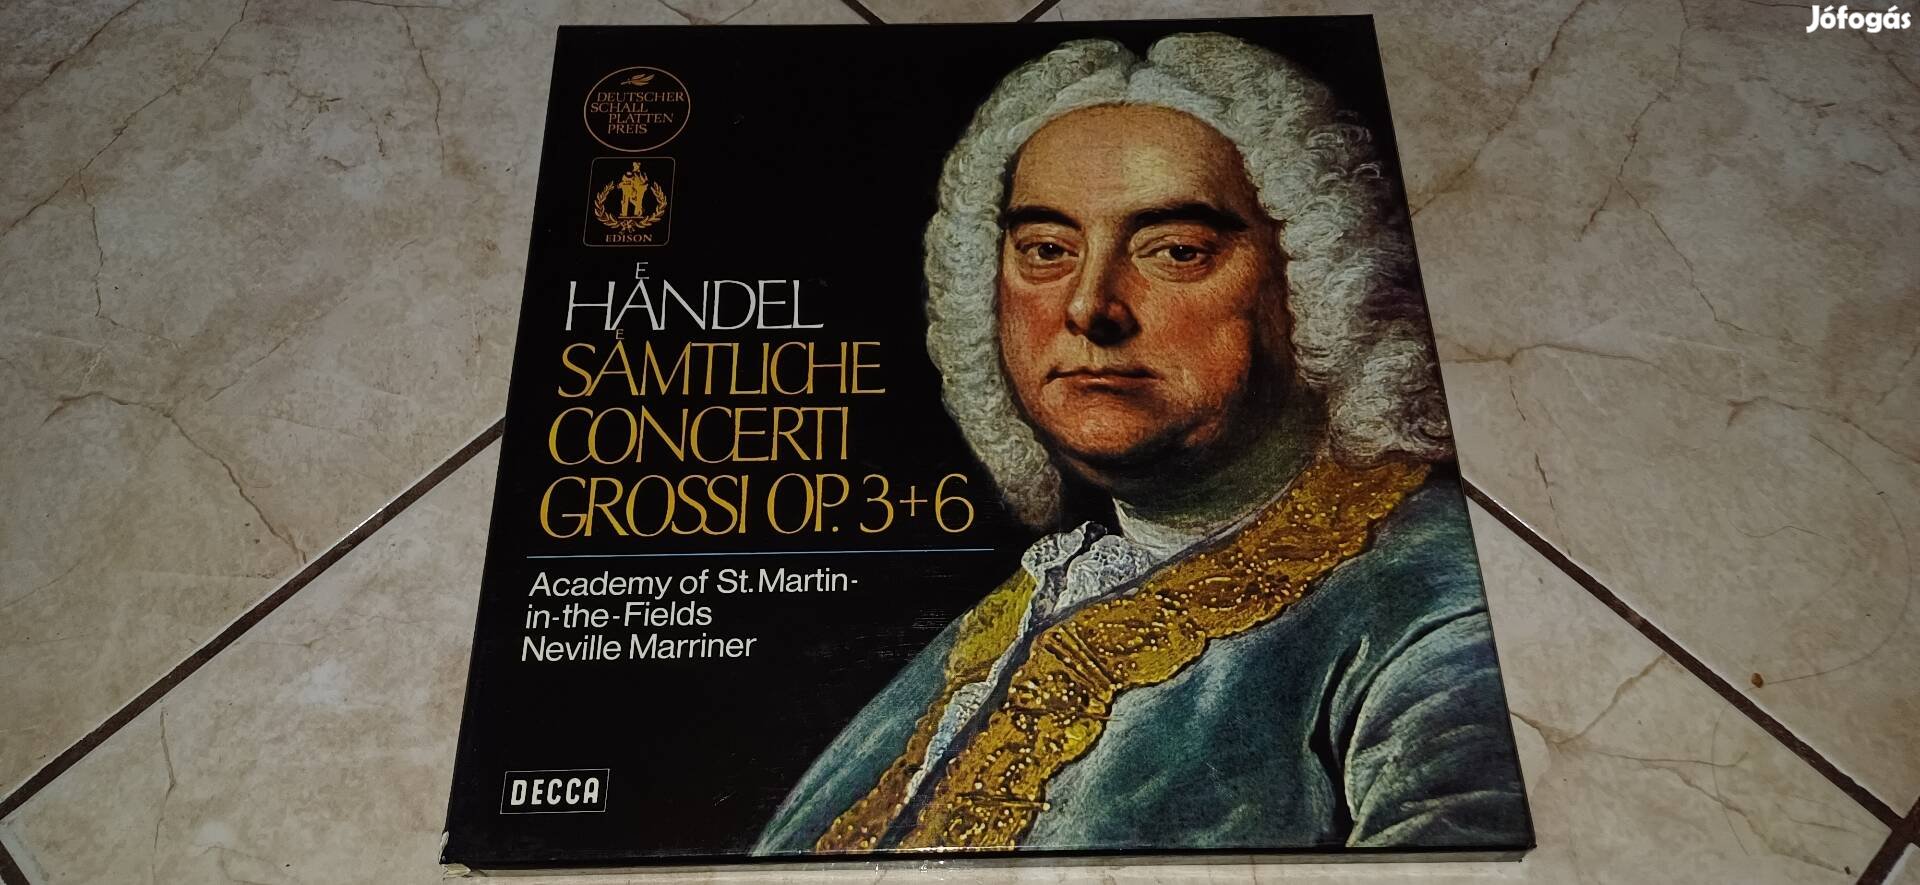 Handel 4db bakelit lemez album